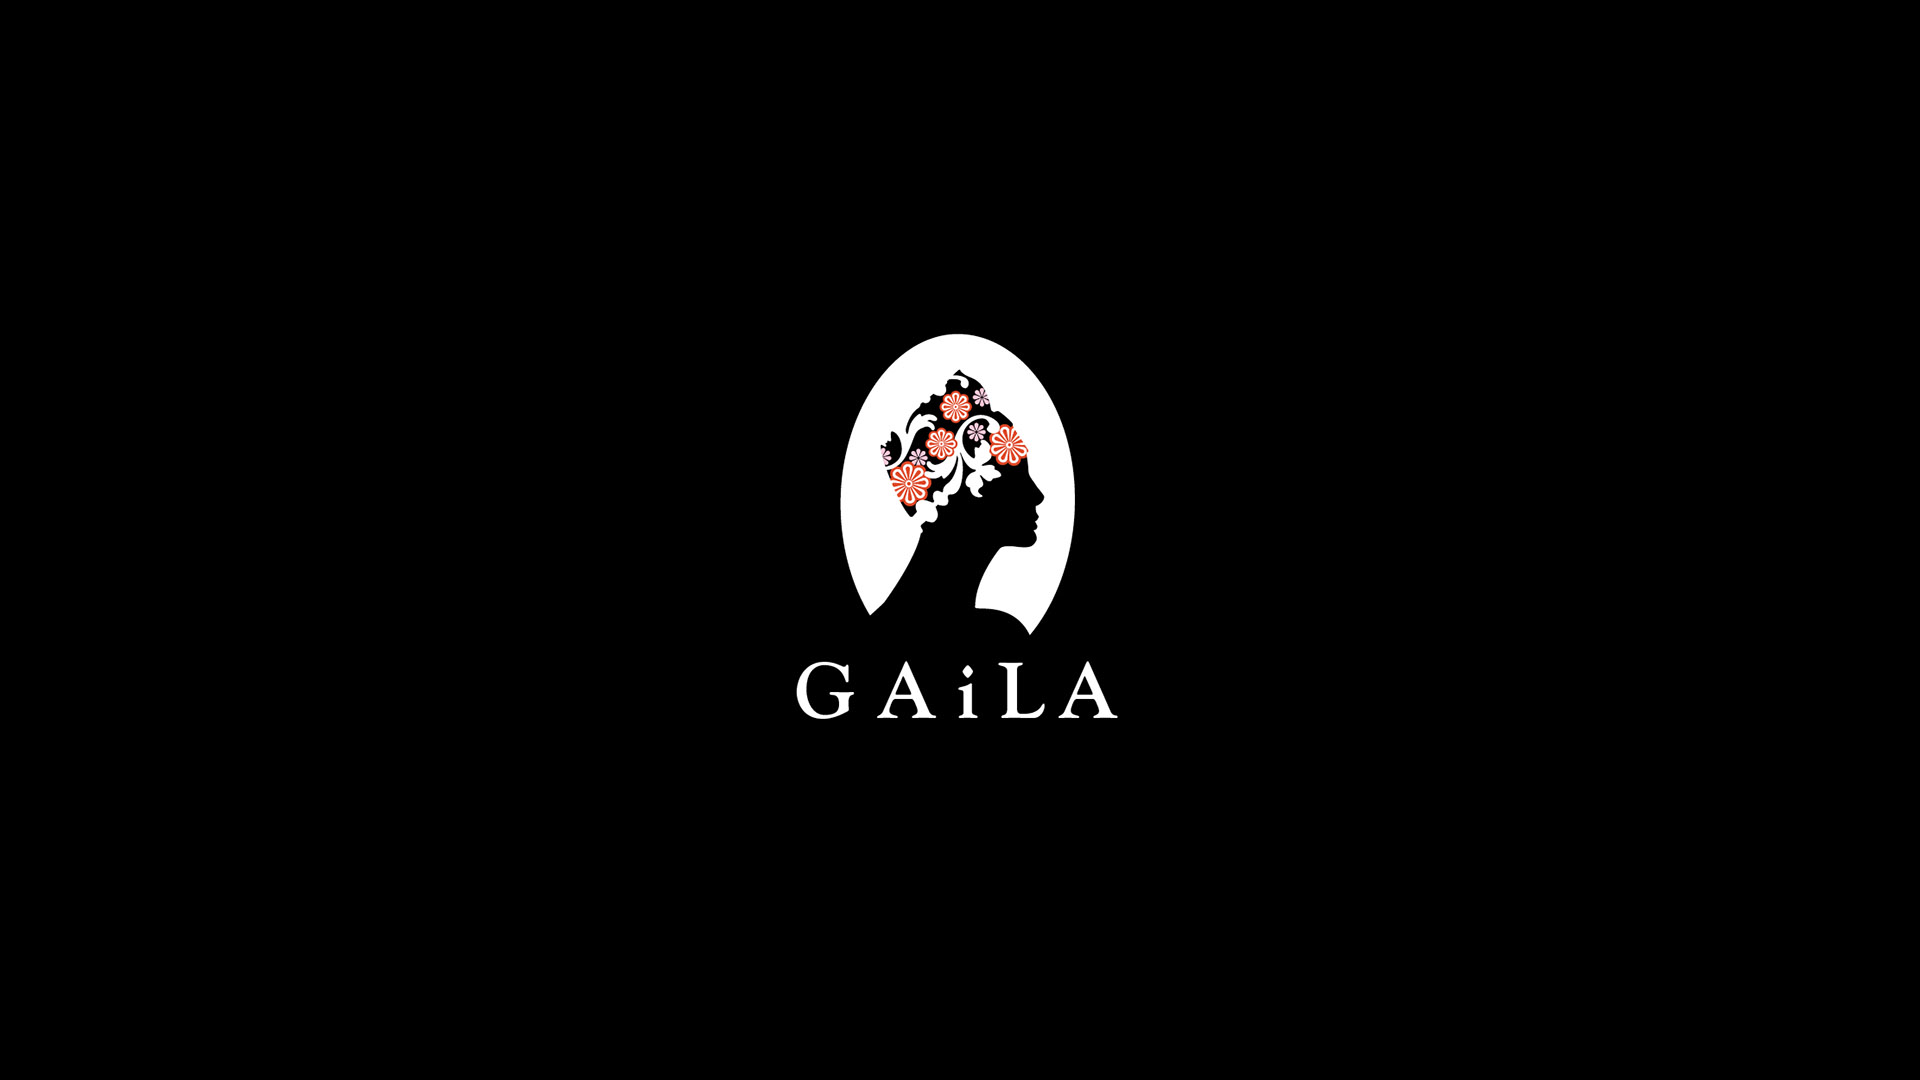 gaila logo on black